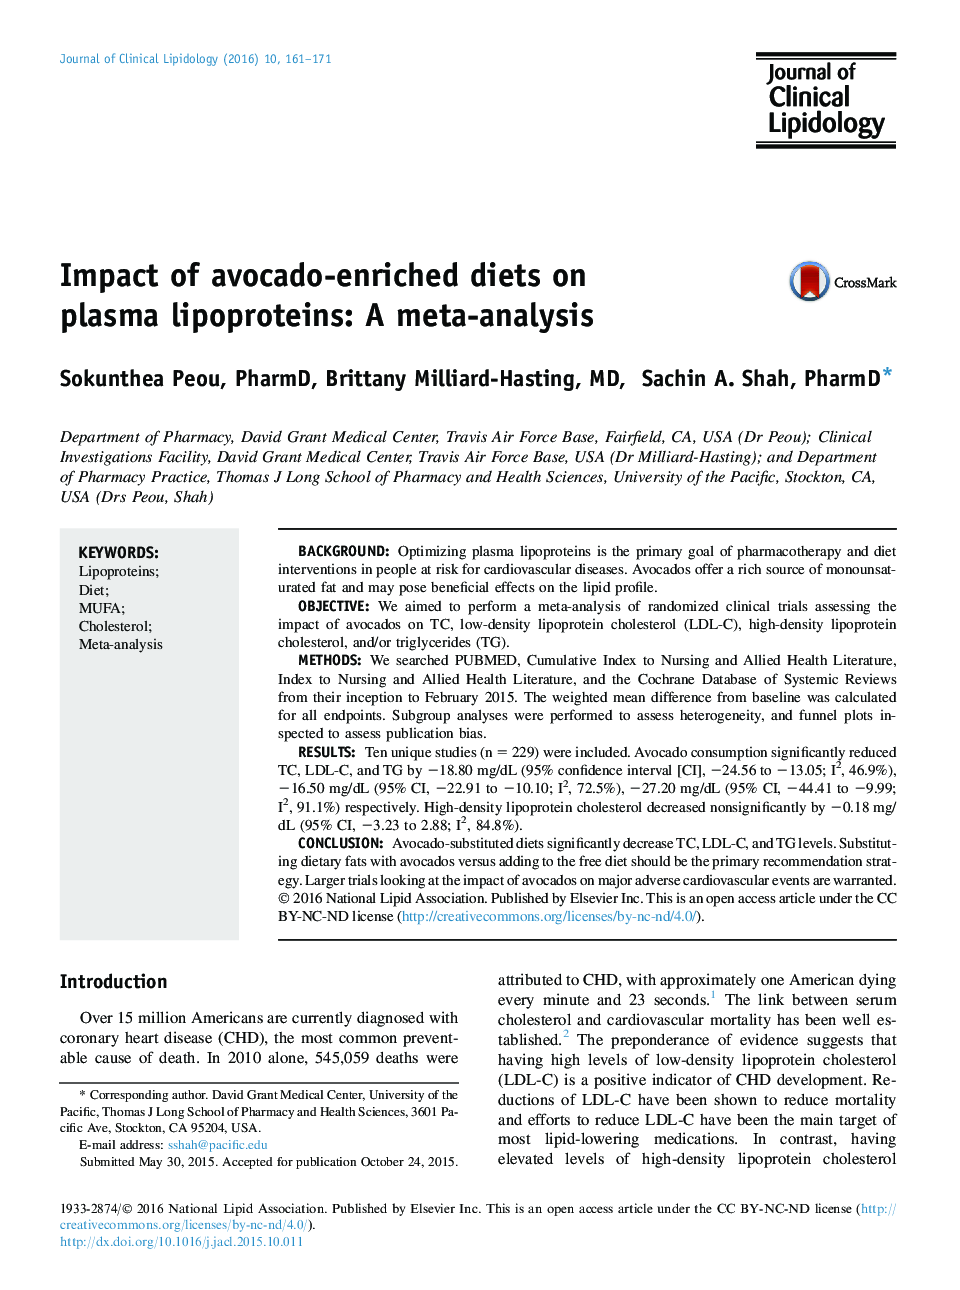 Impact of avocado-enriched diets on plasma lipoproteins: A meta-analysis